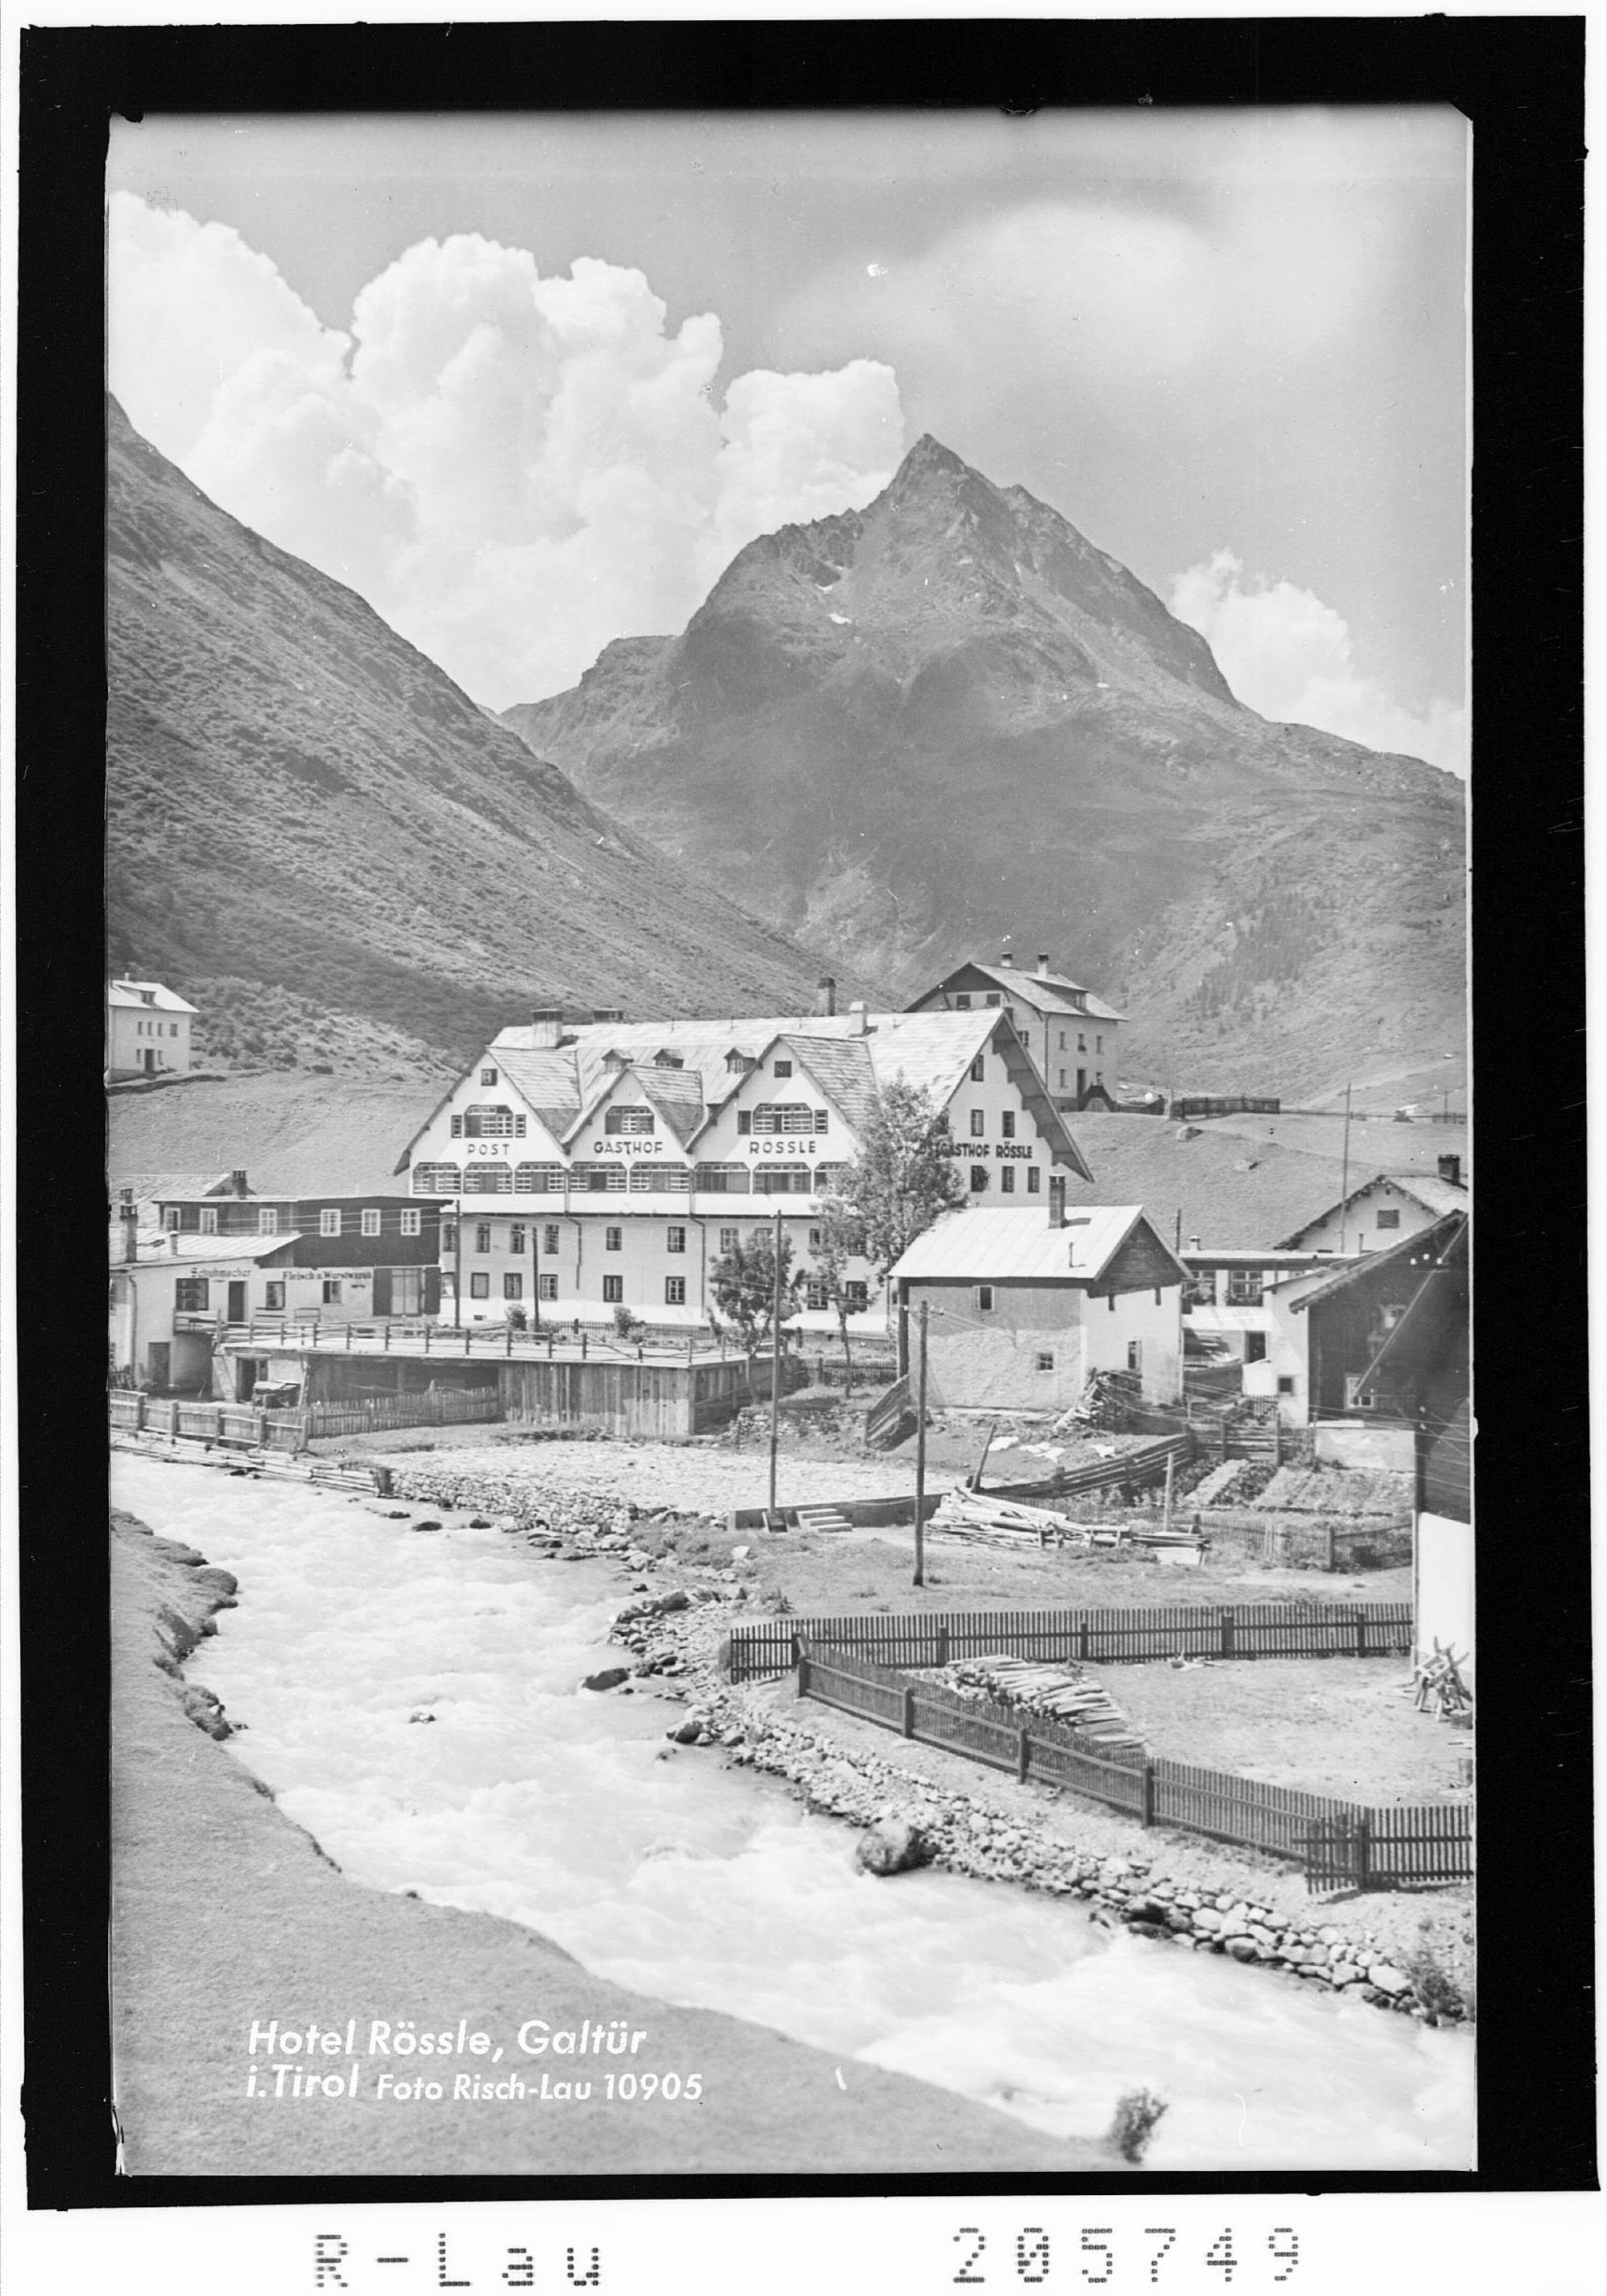 Hotel Rössle / Galtür in Tirol></div>


    <hr>
    <div class=